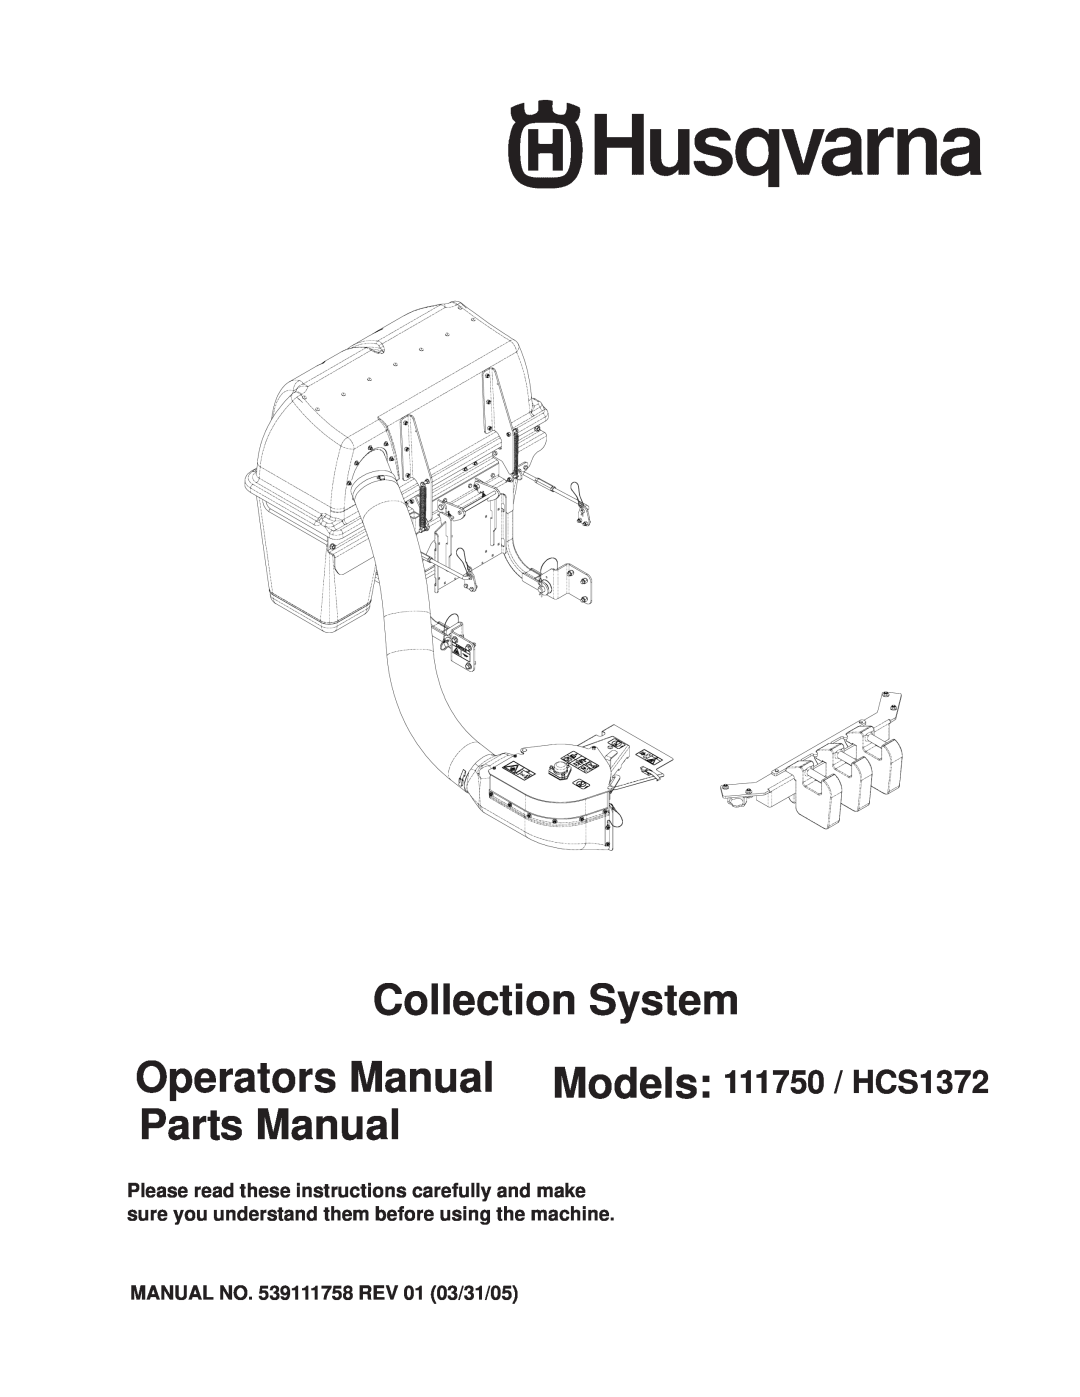 Husqvarna manual Collection System, Operators Manual Models 111750 / HCS1372 Parts Manual 